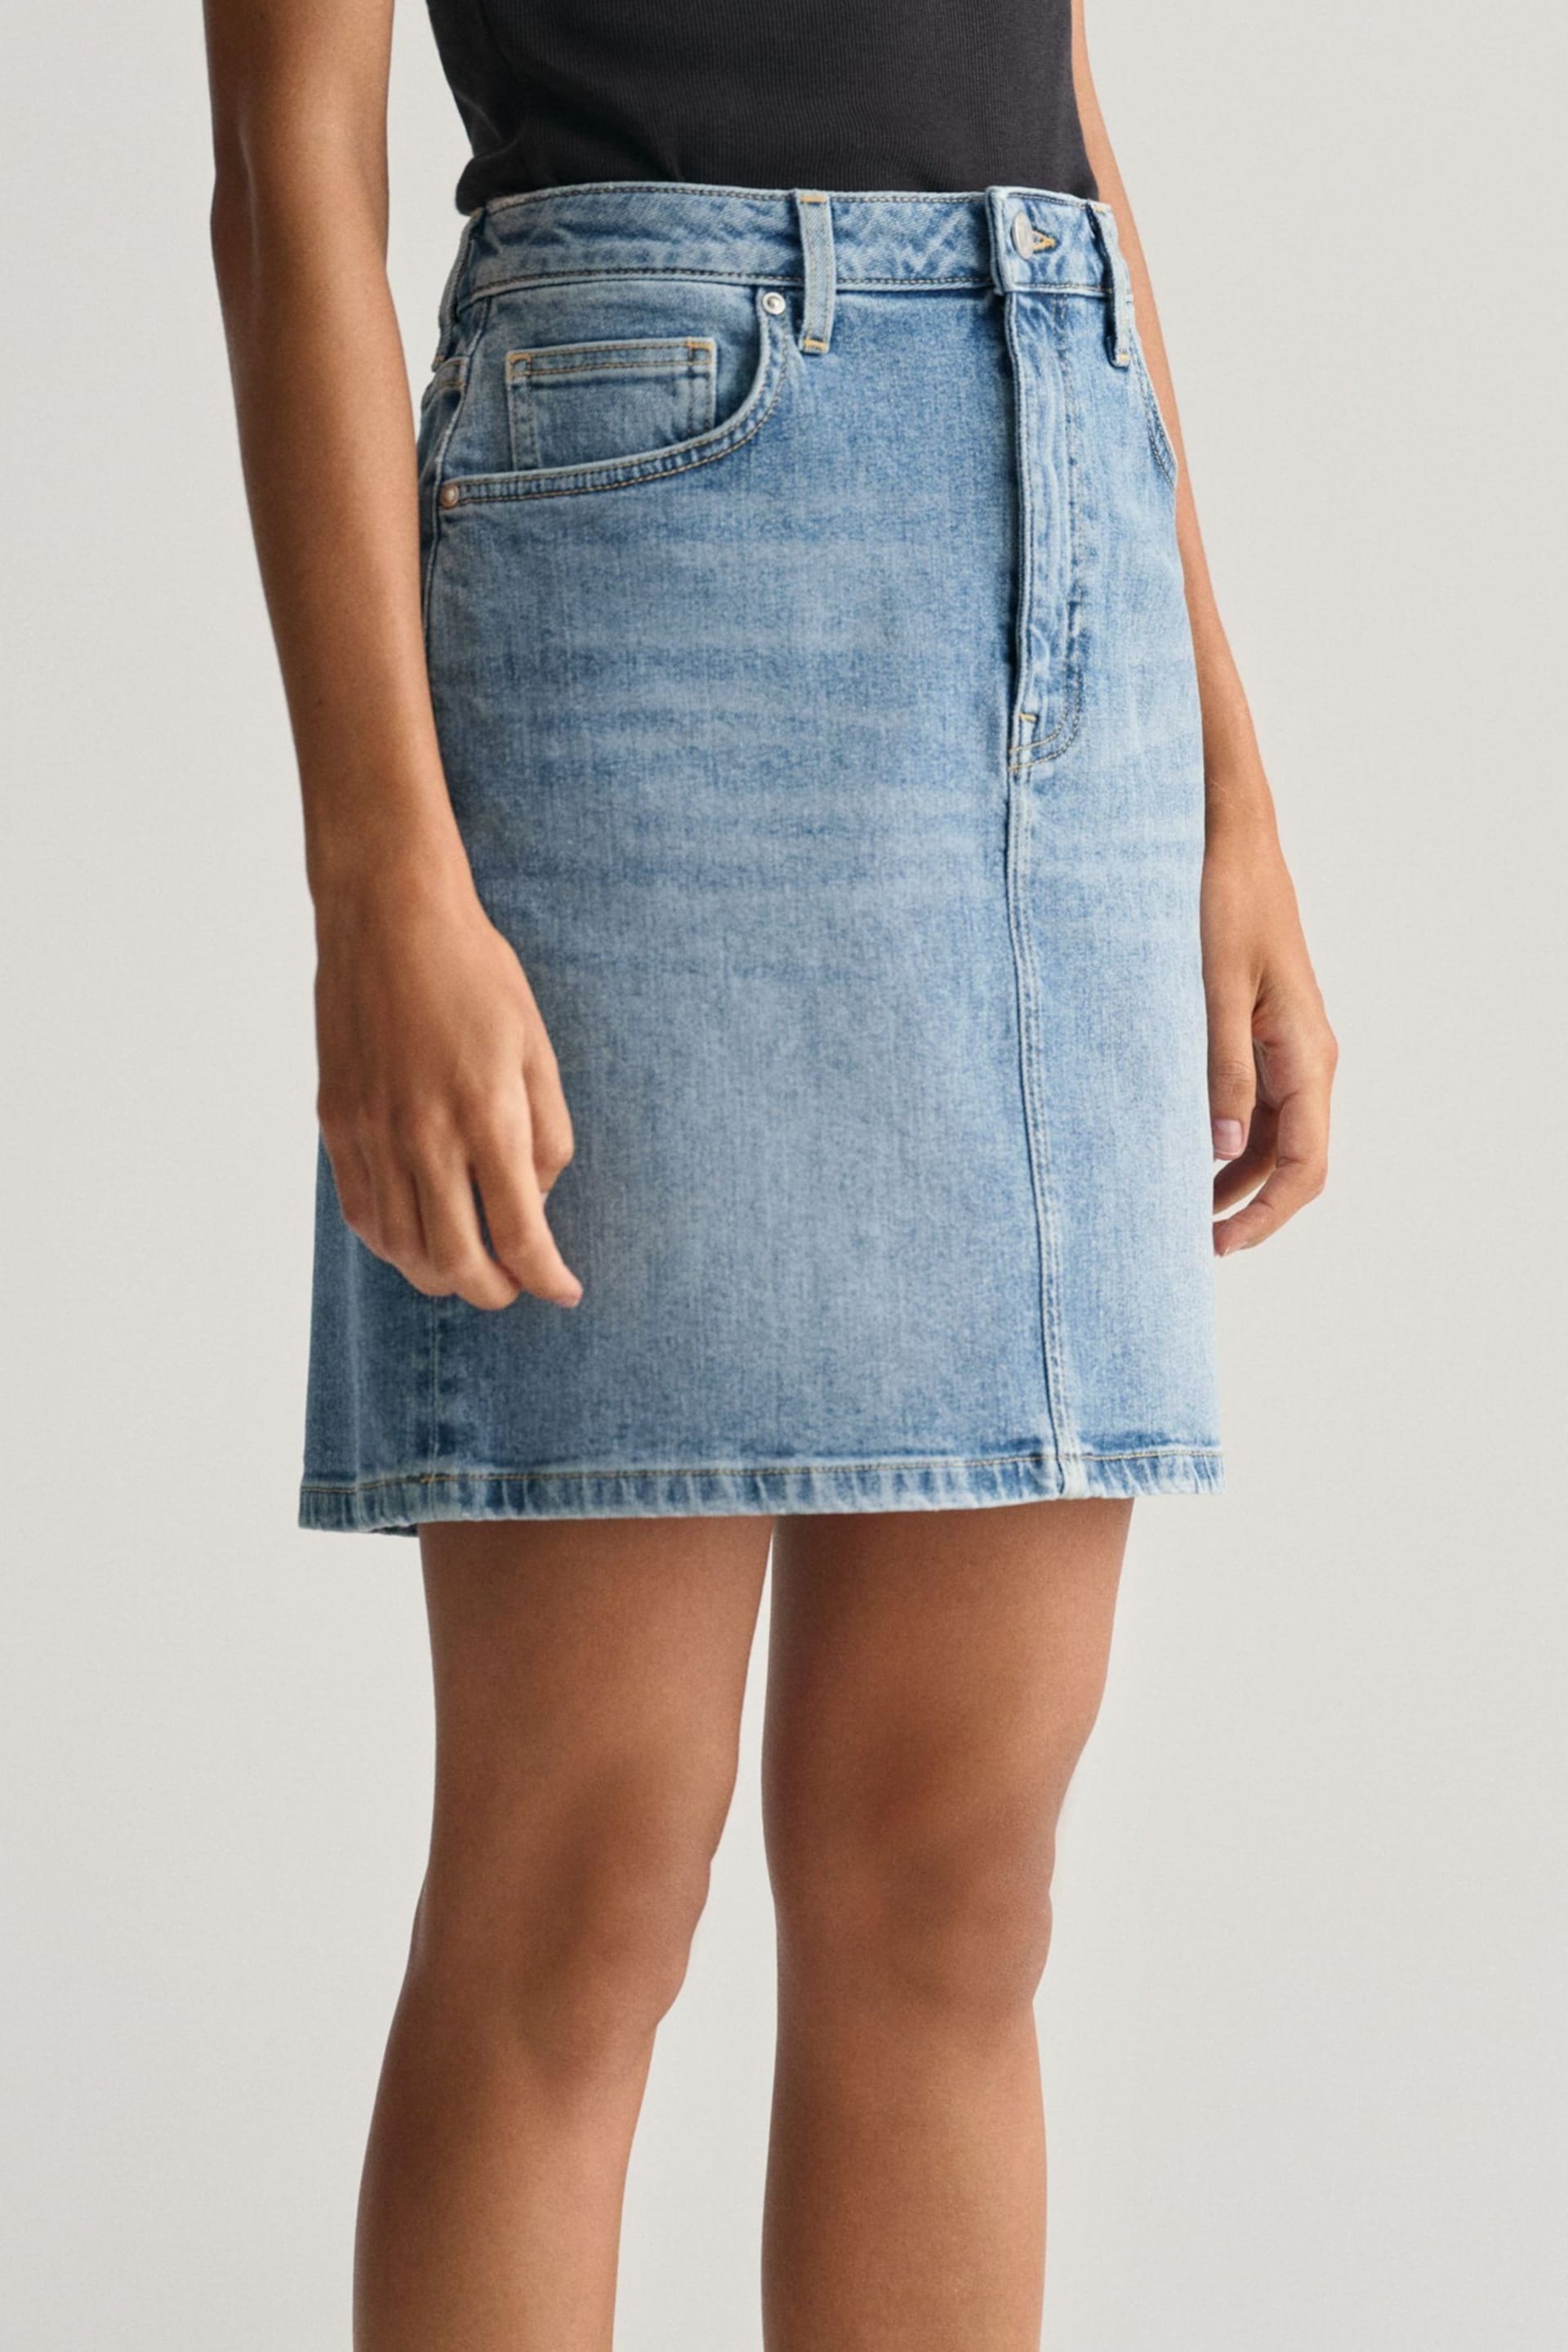 GANT Blue Wash Denim Skirt - Image 5 of 7